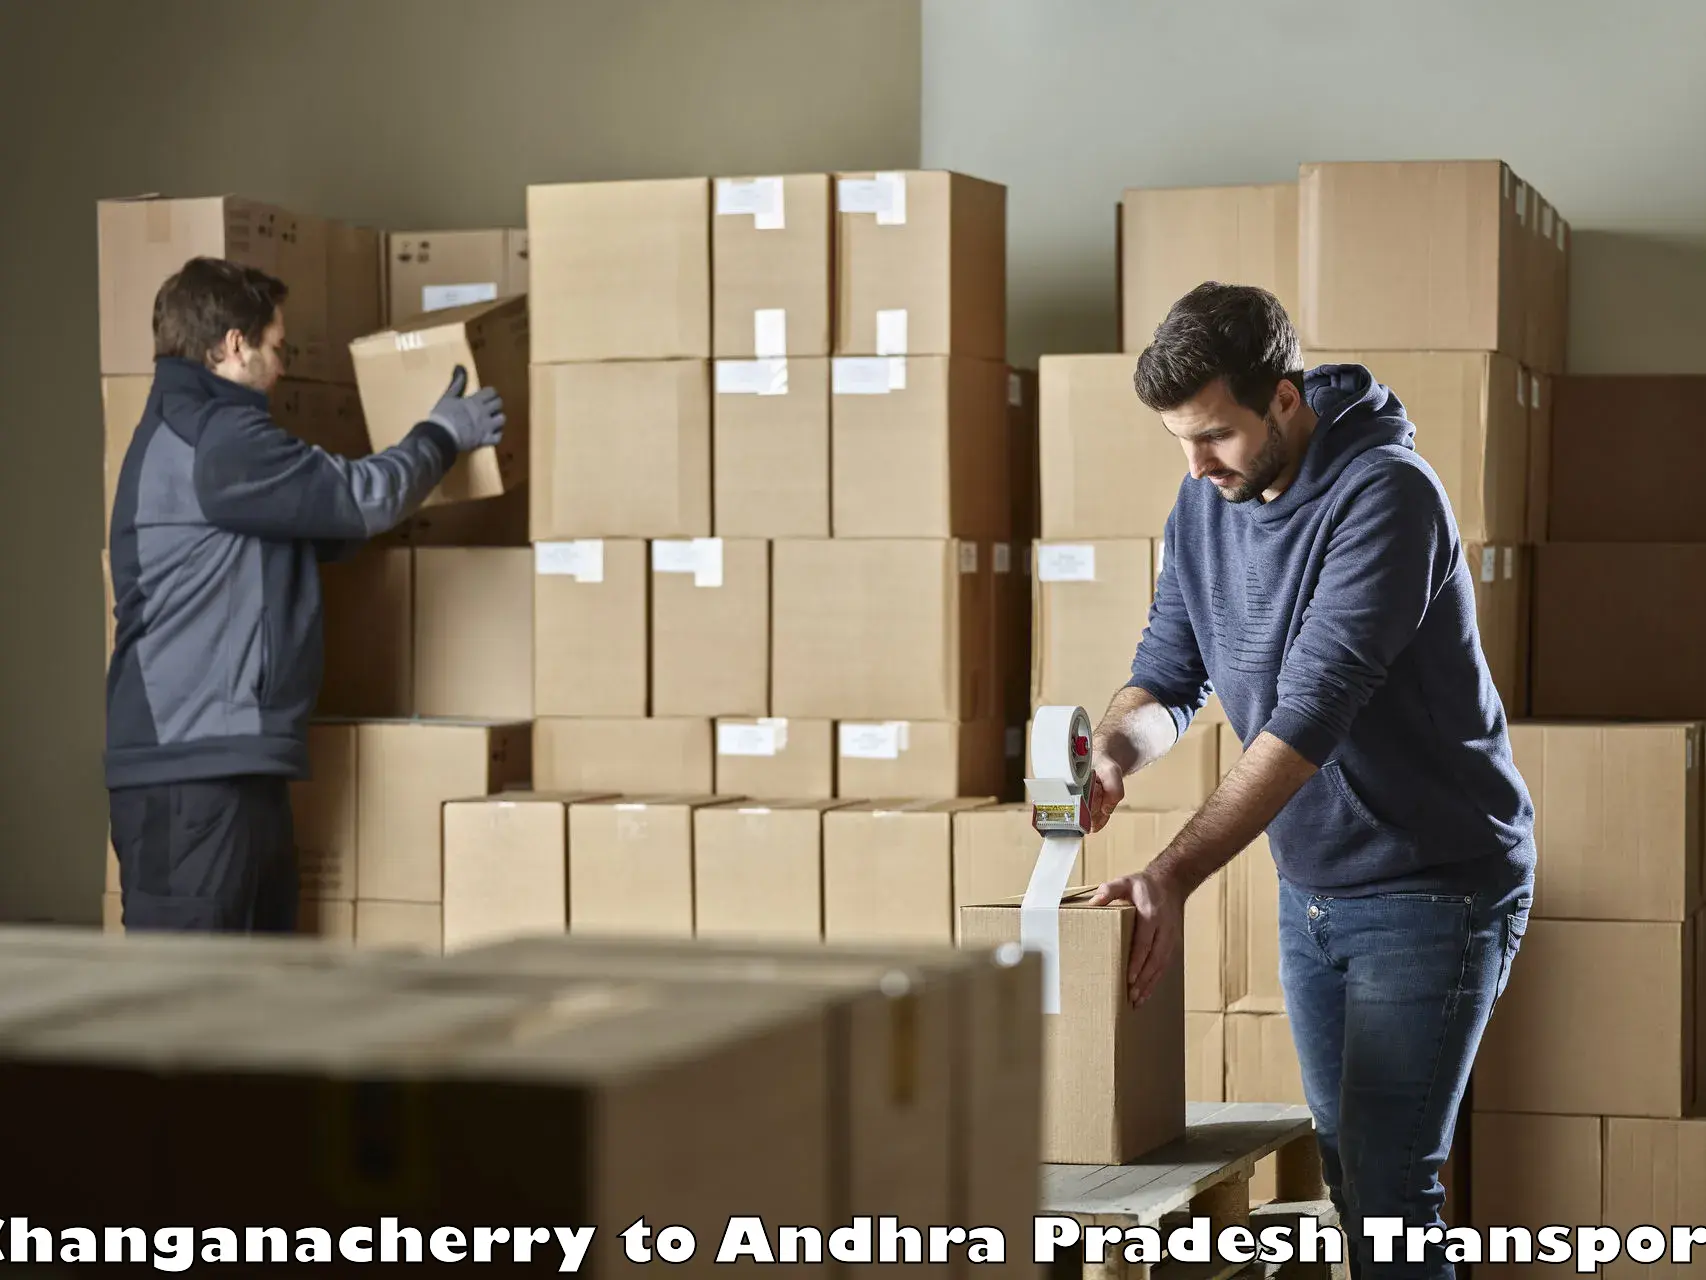 Truck transport companies in India Changanacherry to Allagadda